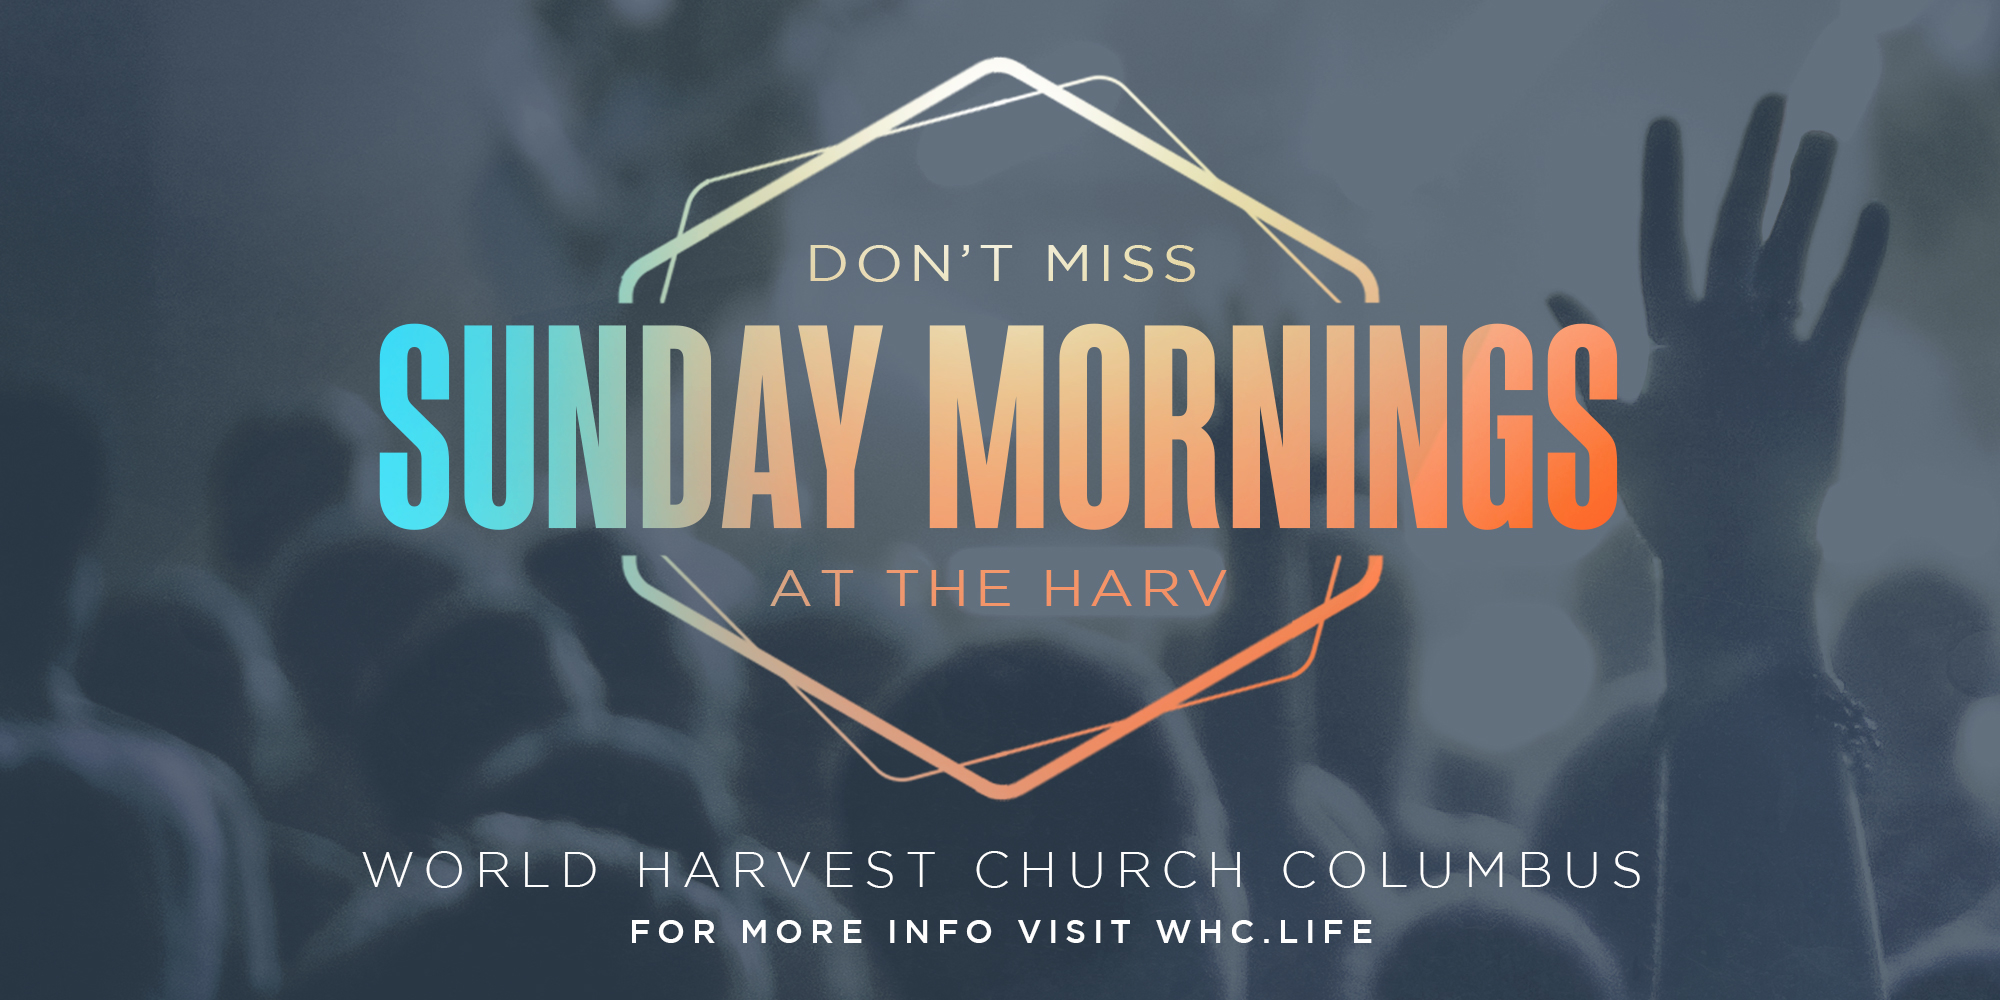 Dont Miss Sunday Mornings at the Harv World Harvest Church Columbus For More Info Visit WHC.LIFE